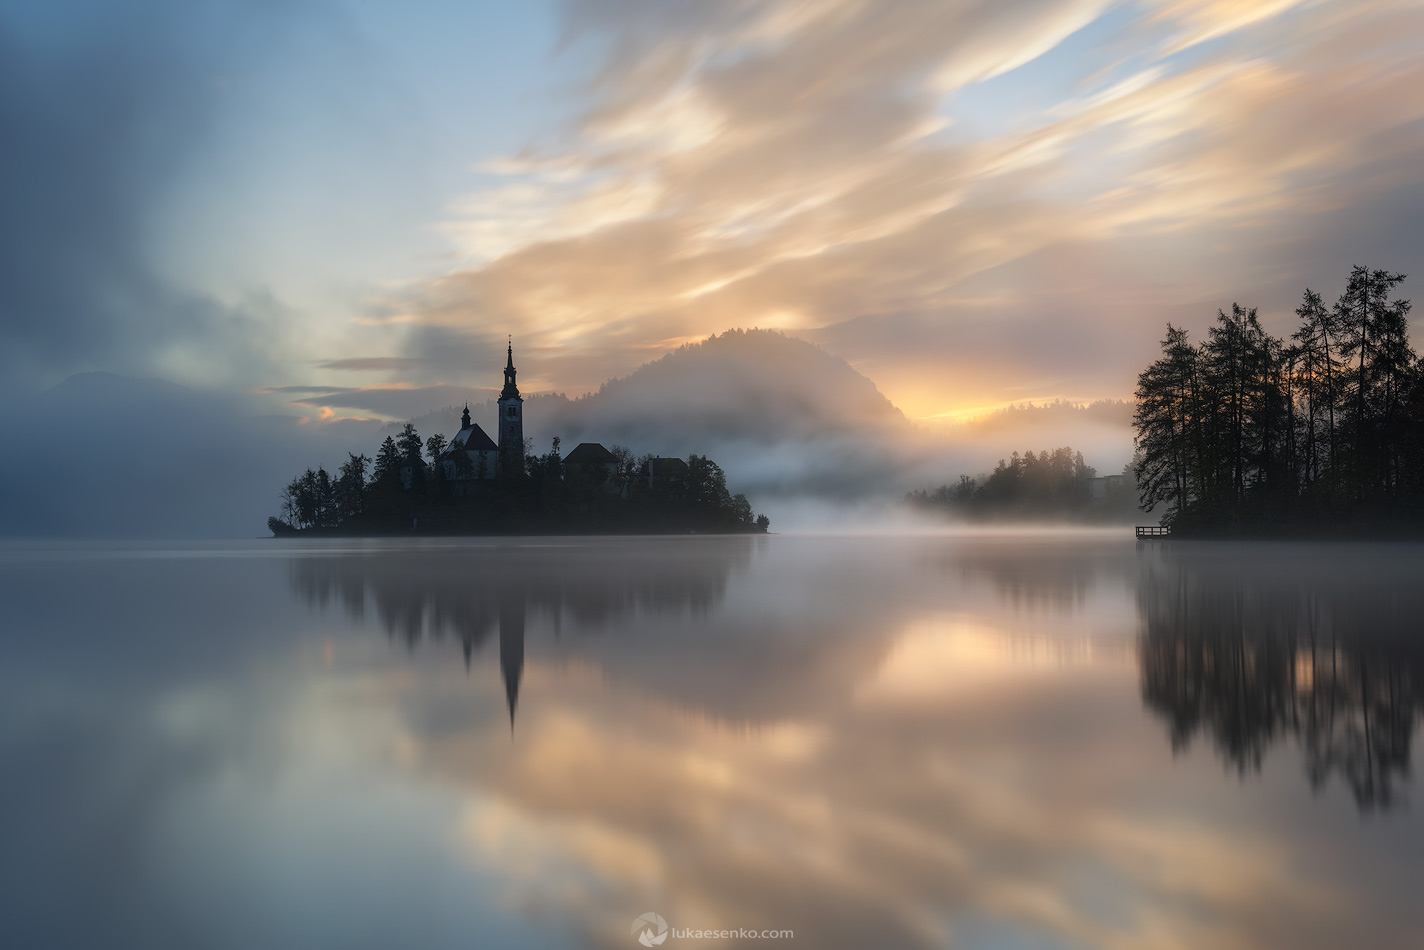 Best misty photo of Lake Bled at sunrise